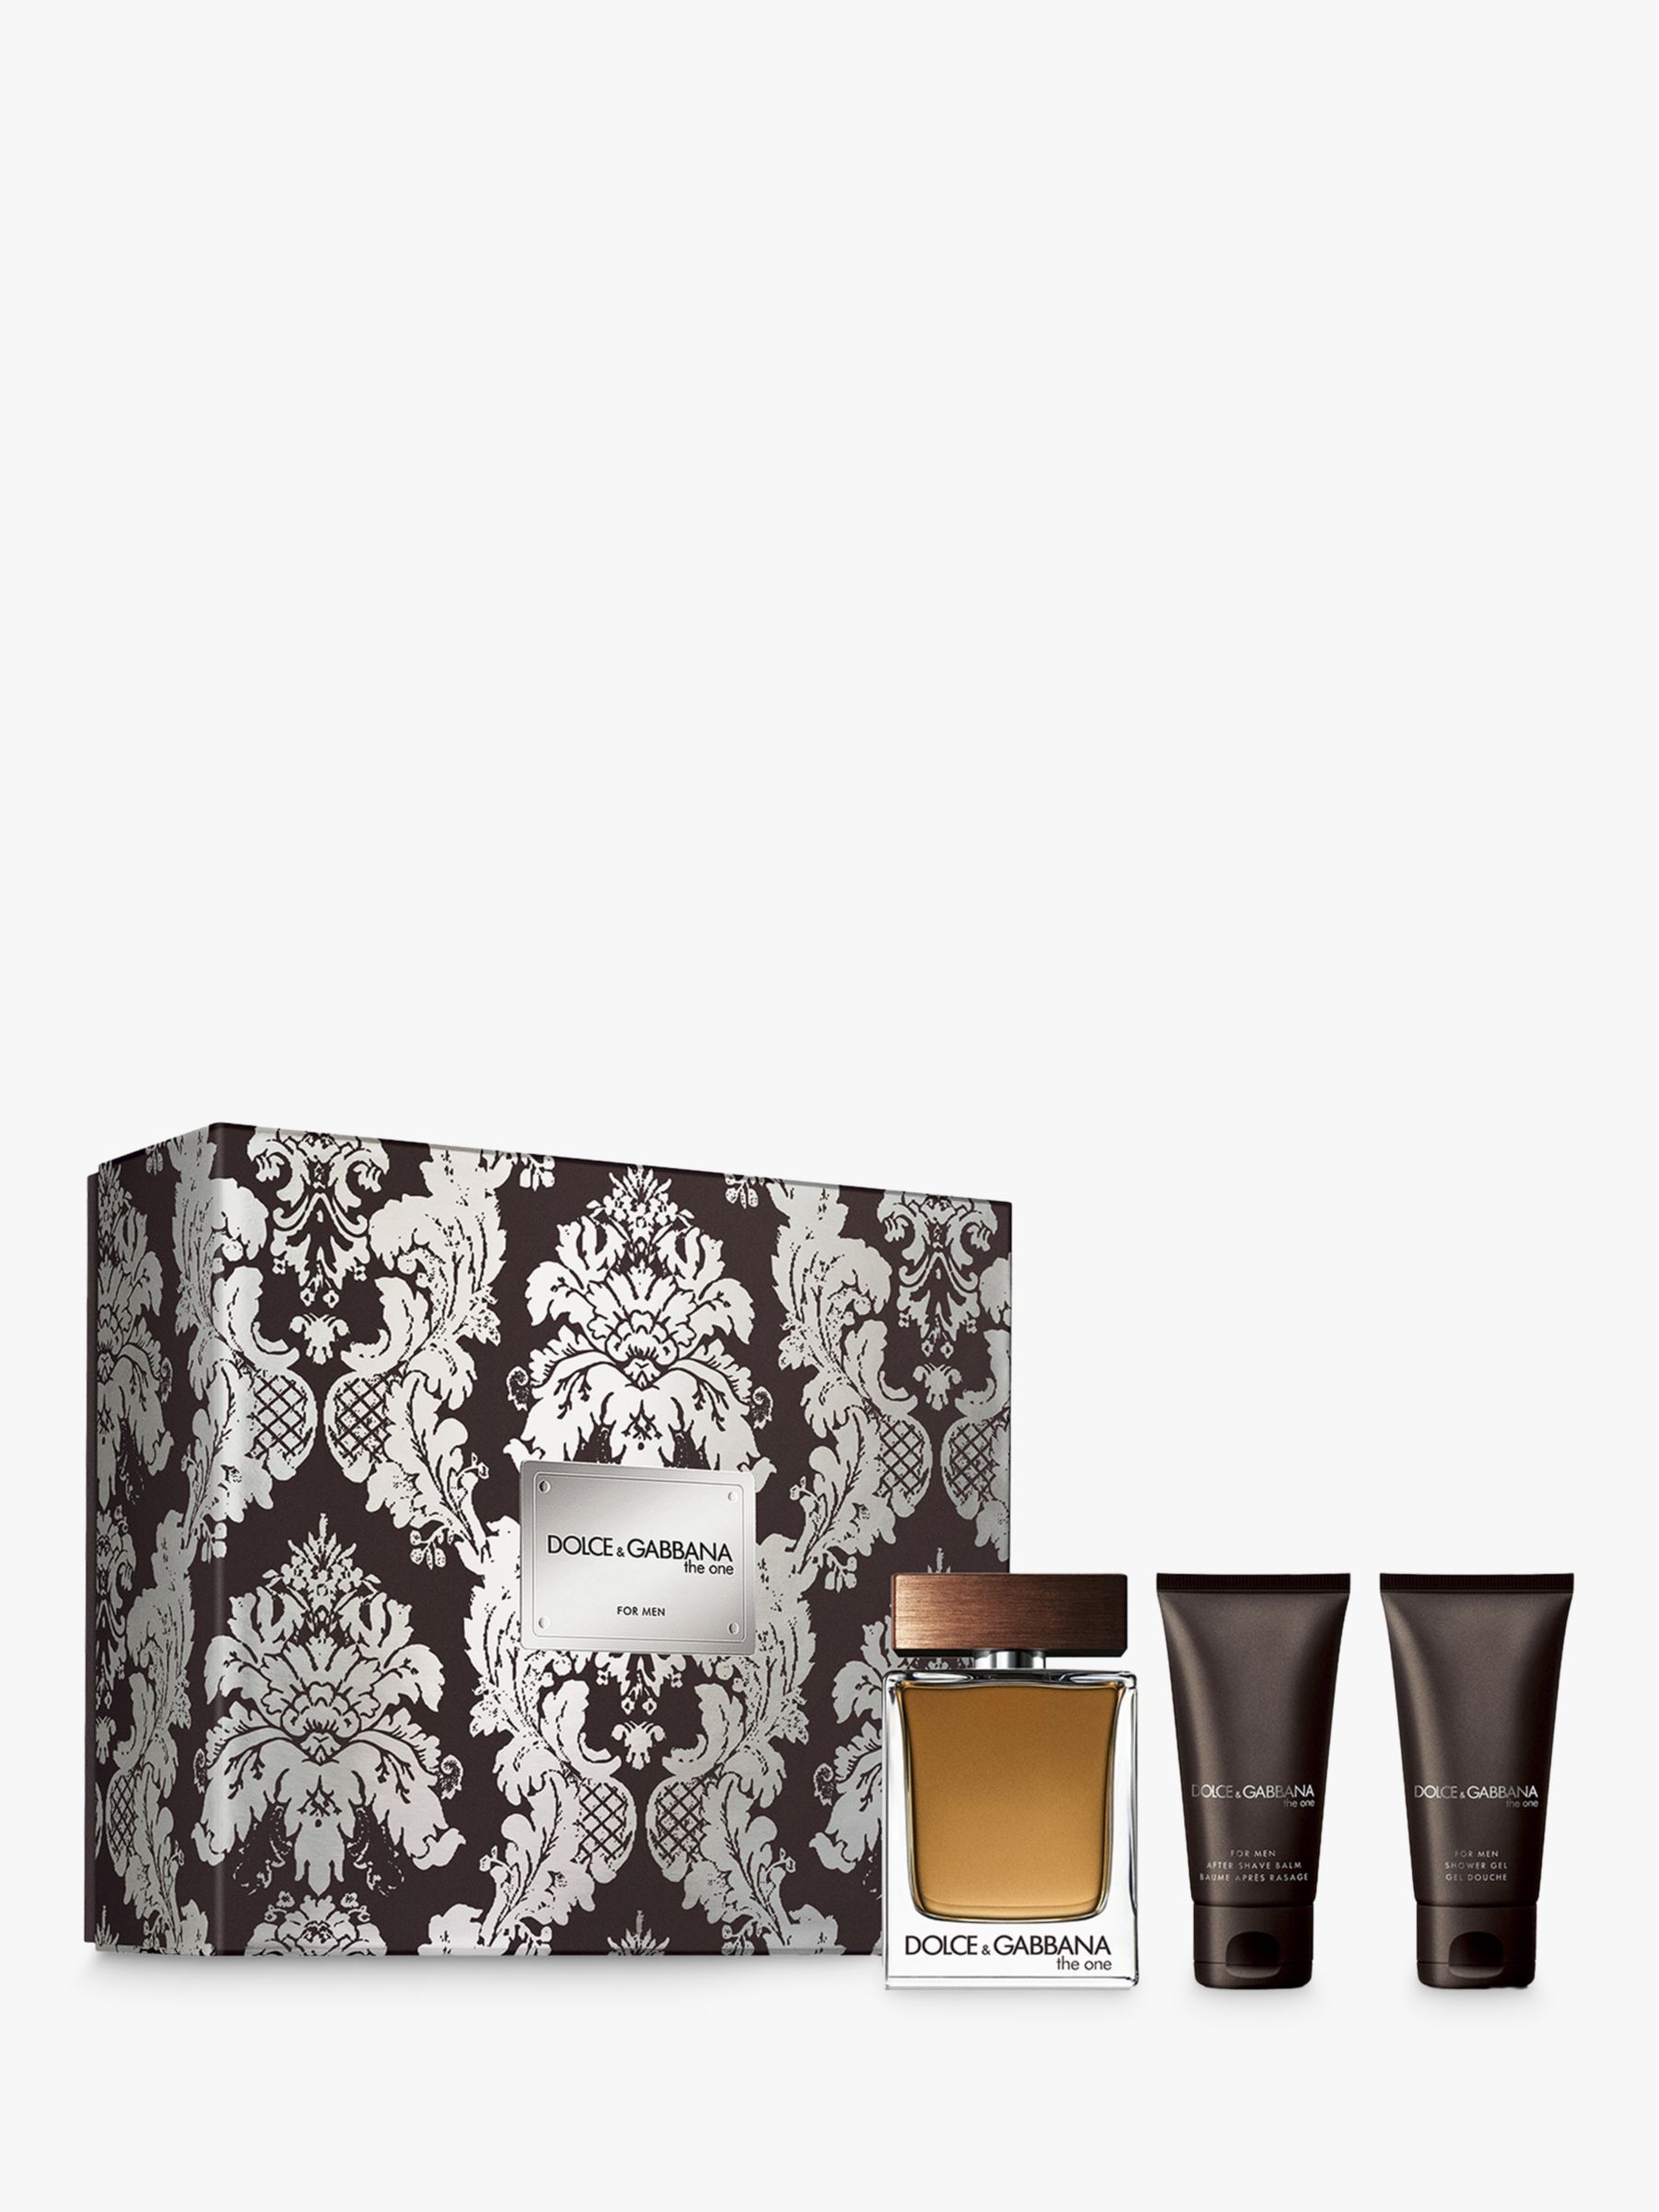 Dolce & Gabbana The One for Men Eau de Toilette 100ml Fragrance Gift Set